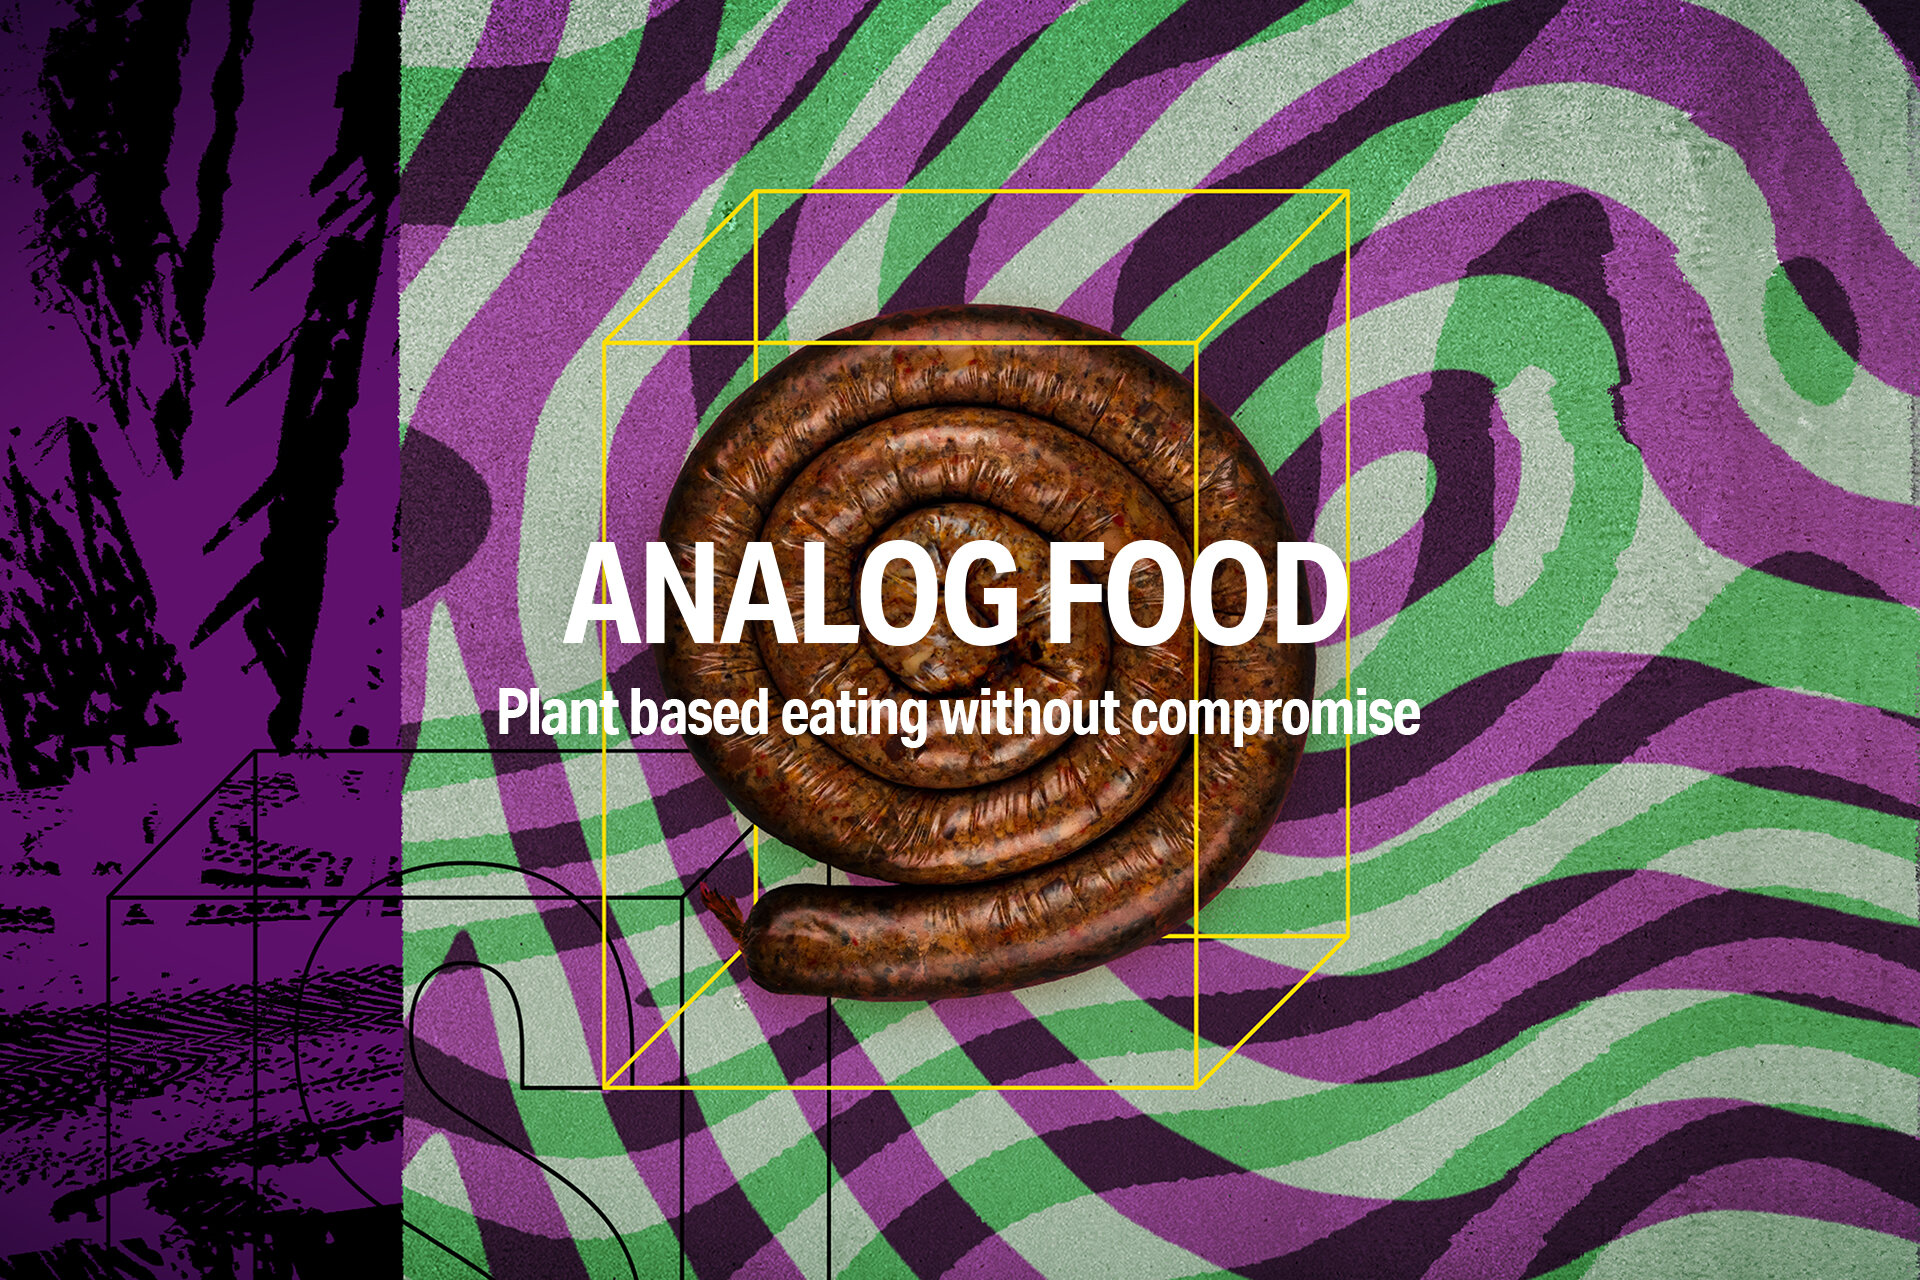 Symplicity fermented vegan plant based foods – Analog Food Cumberland sausage banner